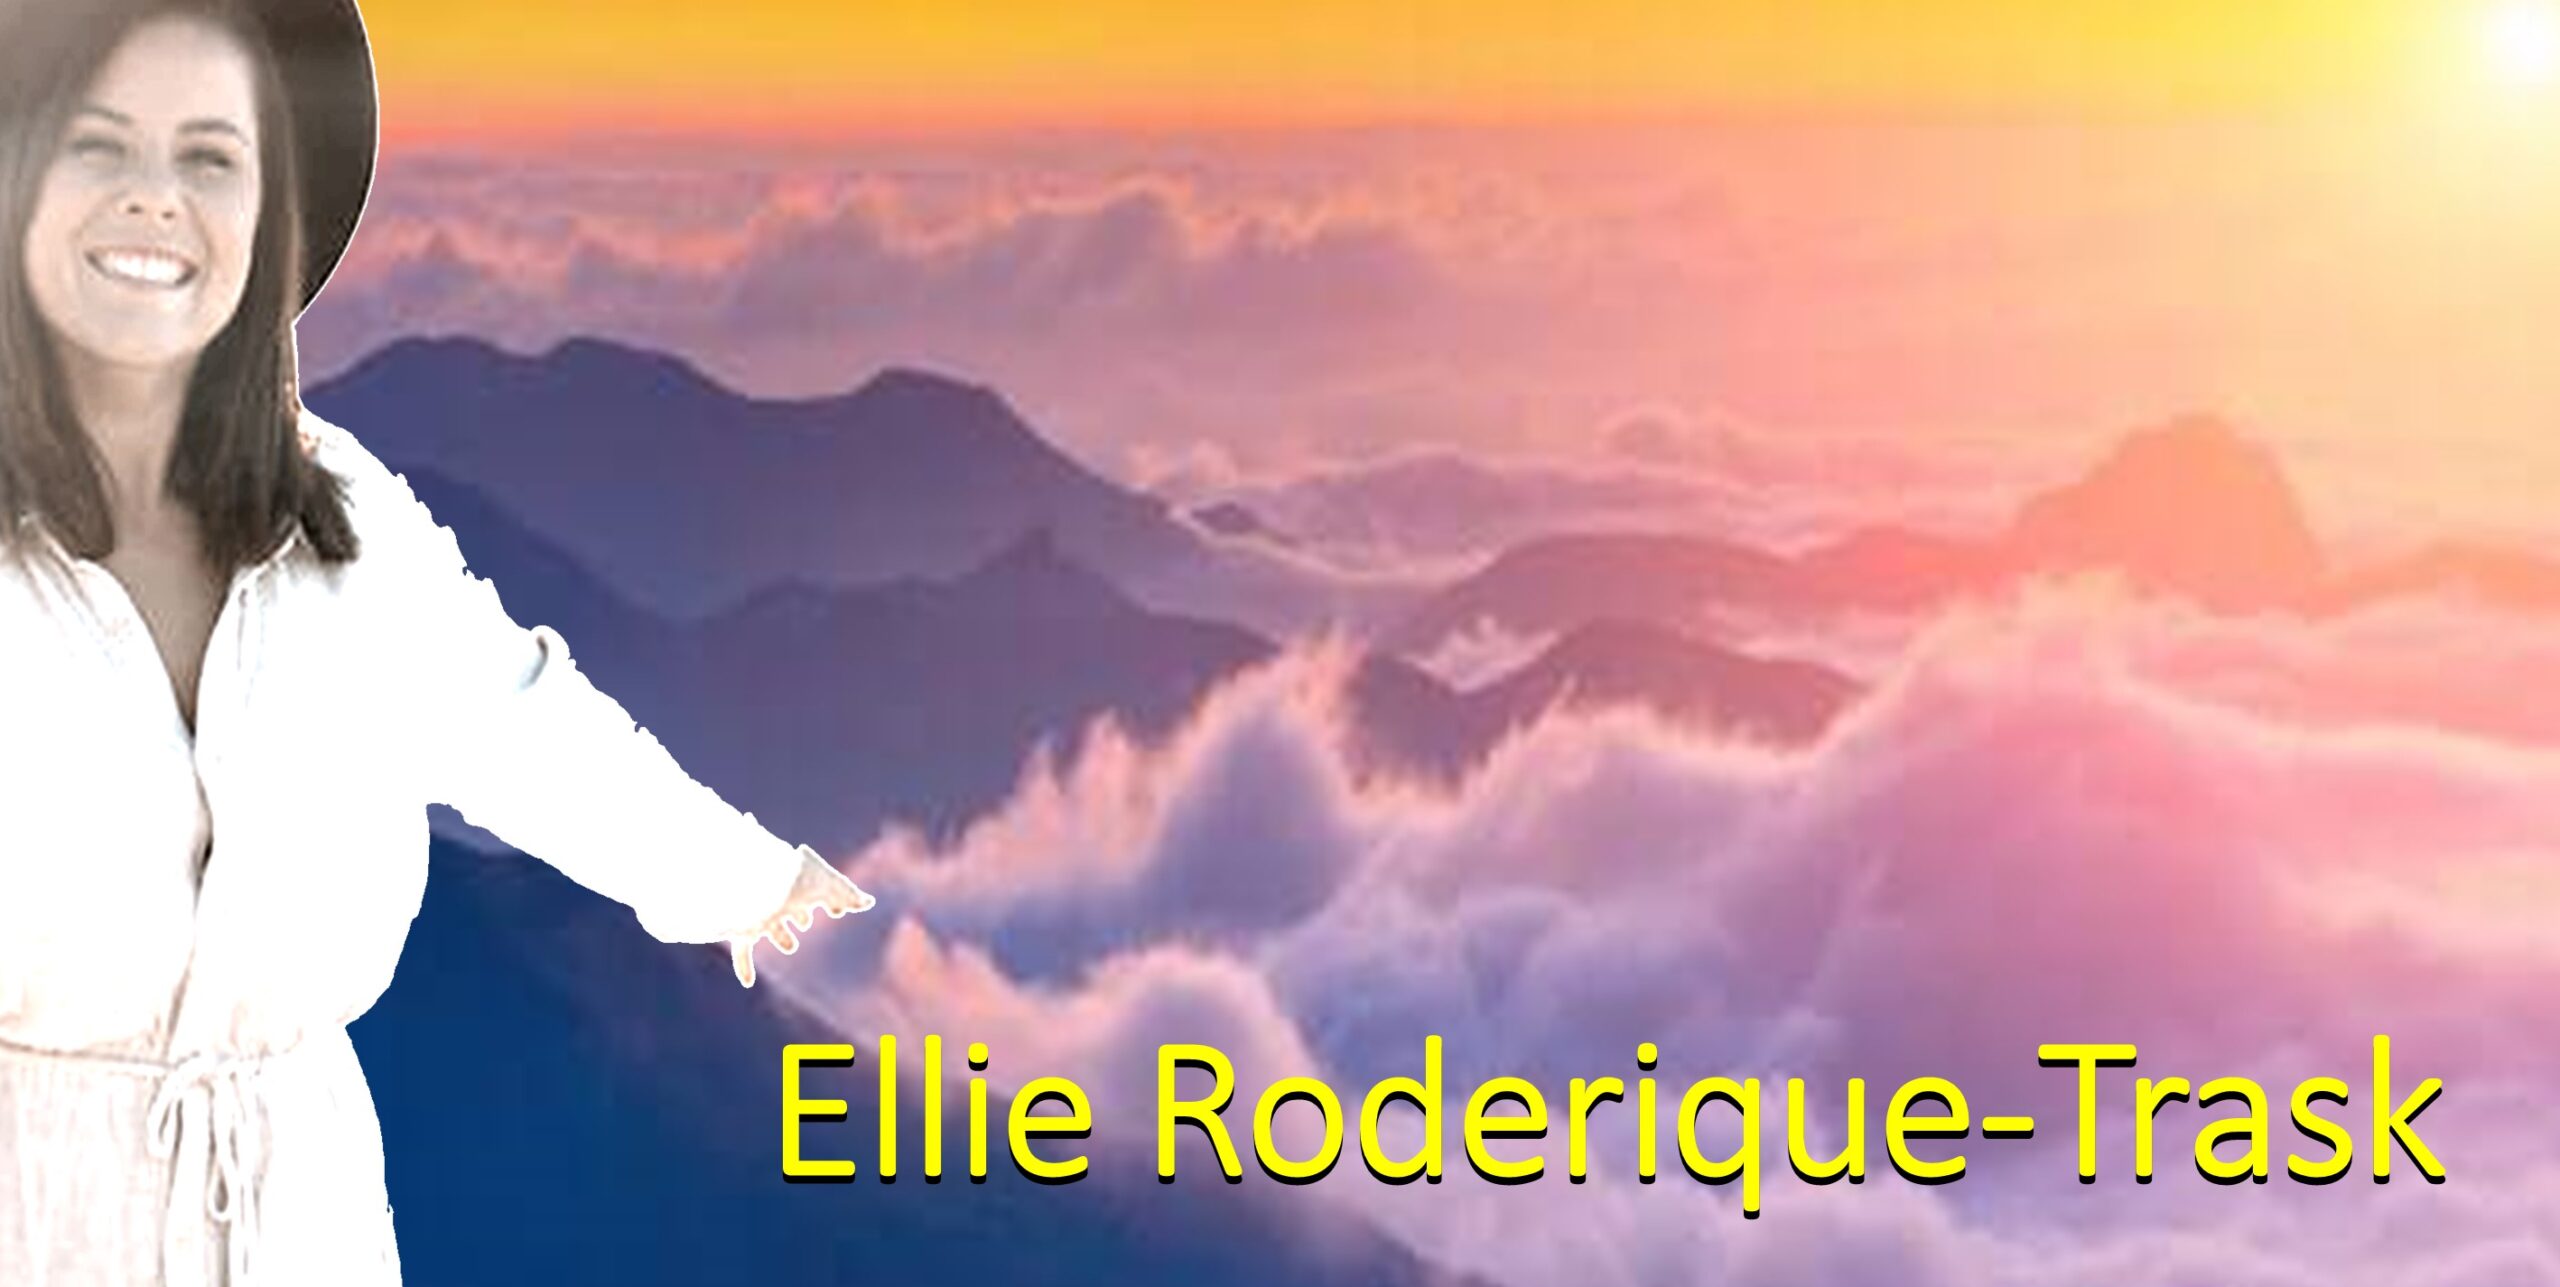 Ellie Roderique-Trask